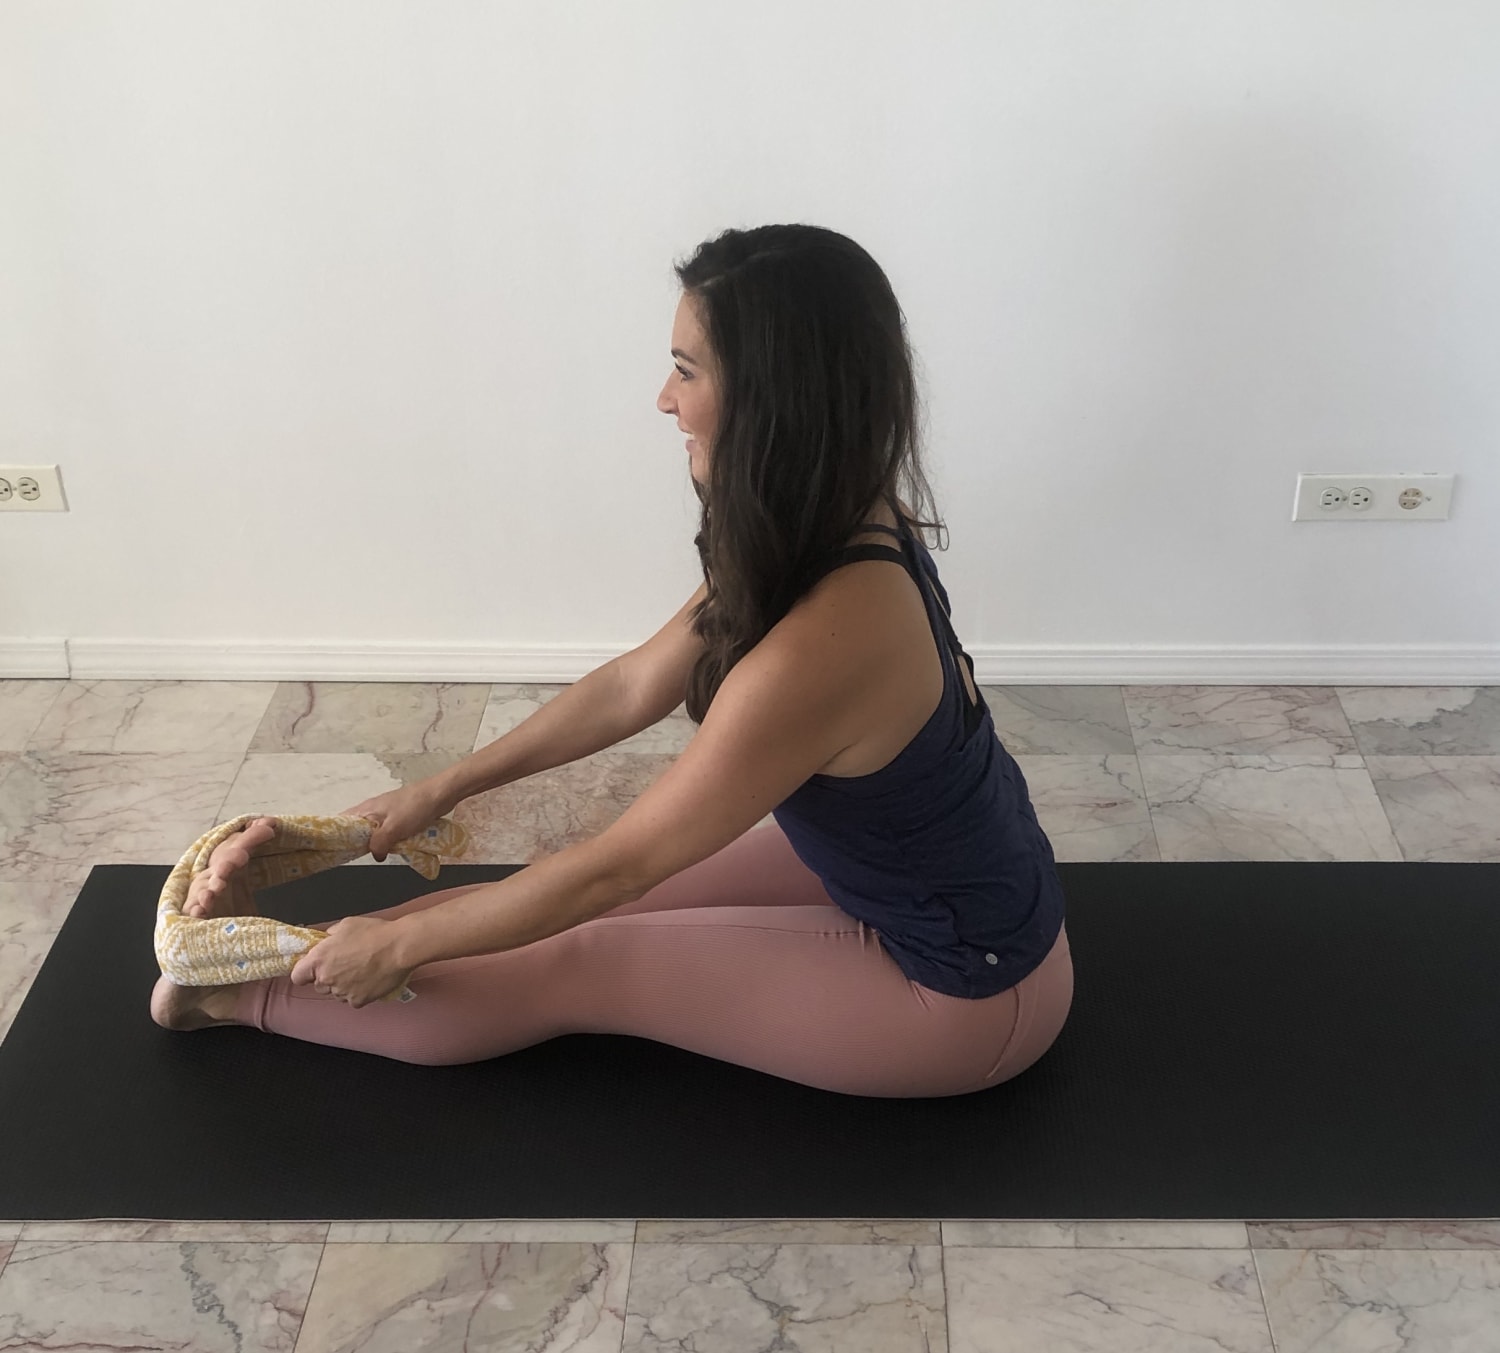 Yoga For Feet: 6 Poses For Achy Feet - YogaUOnline